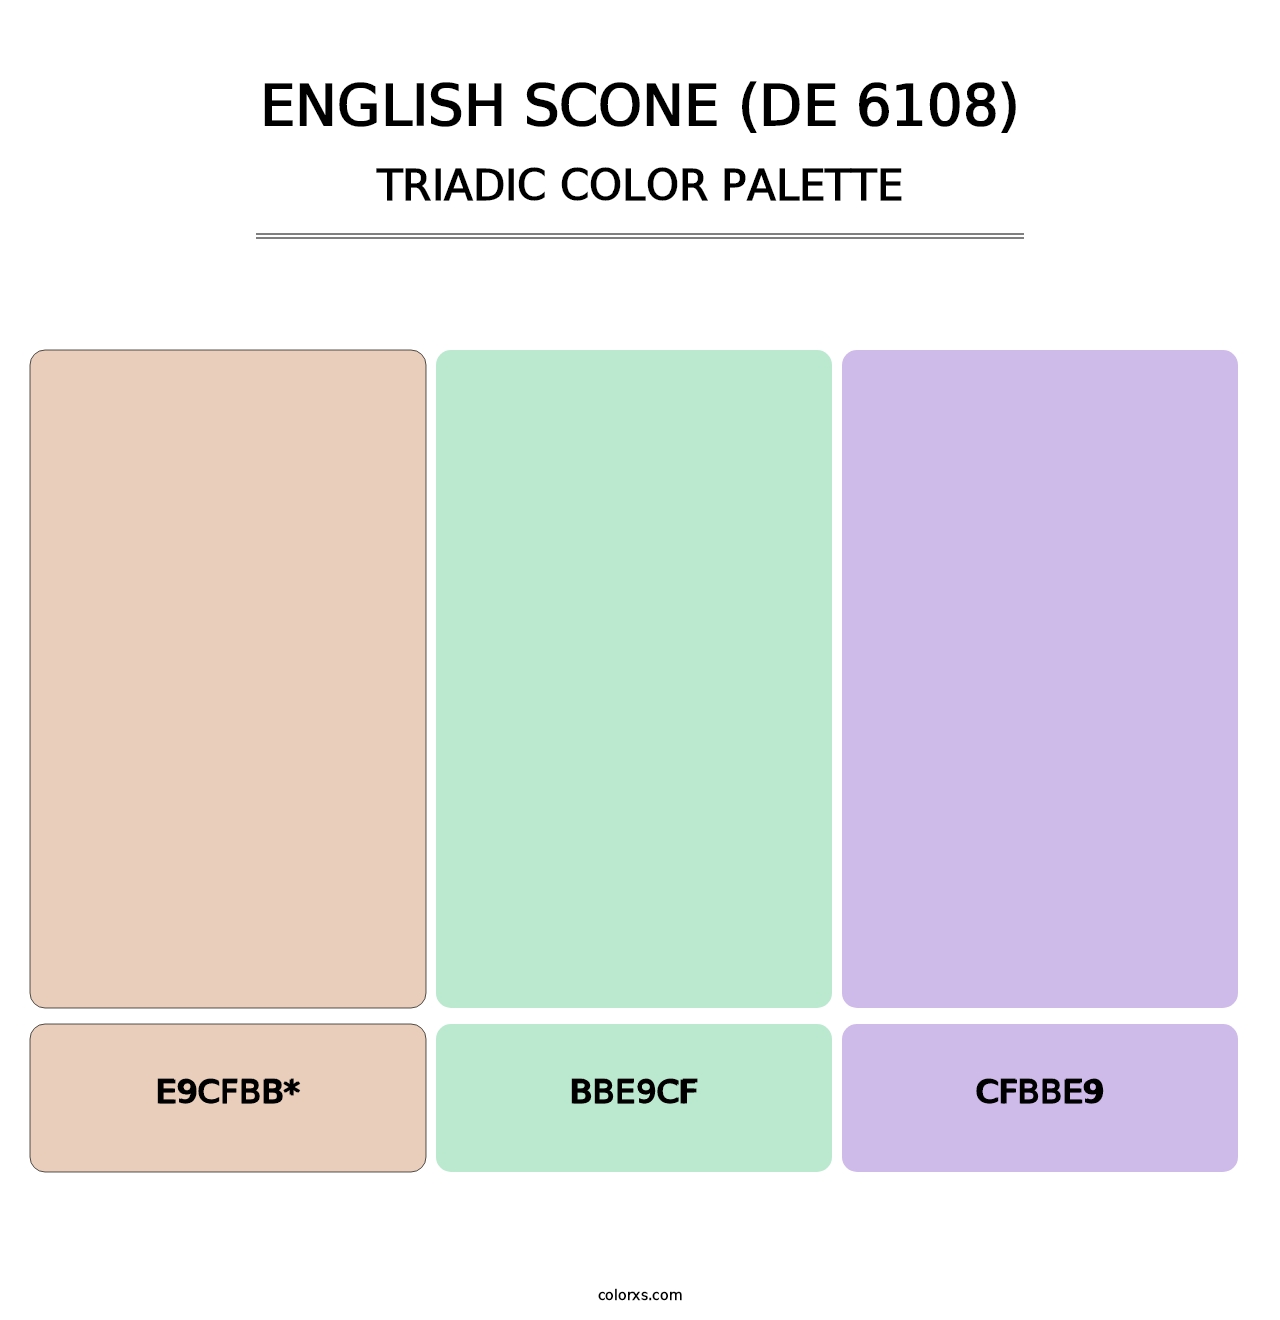 English Scone (DE 6108) - Triadic Color Palette